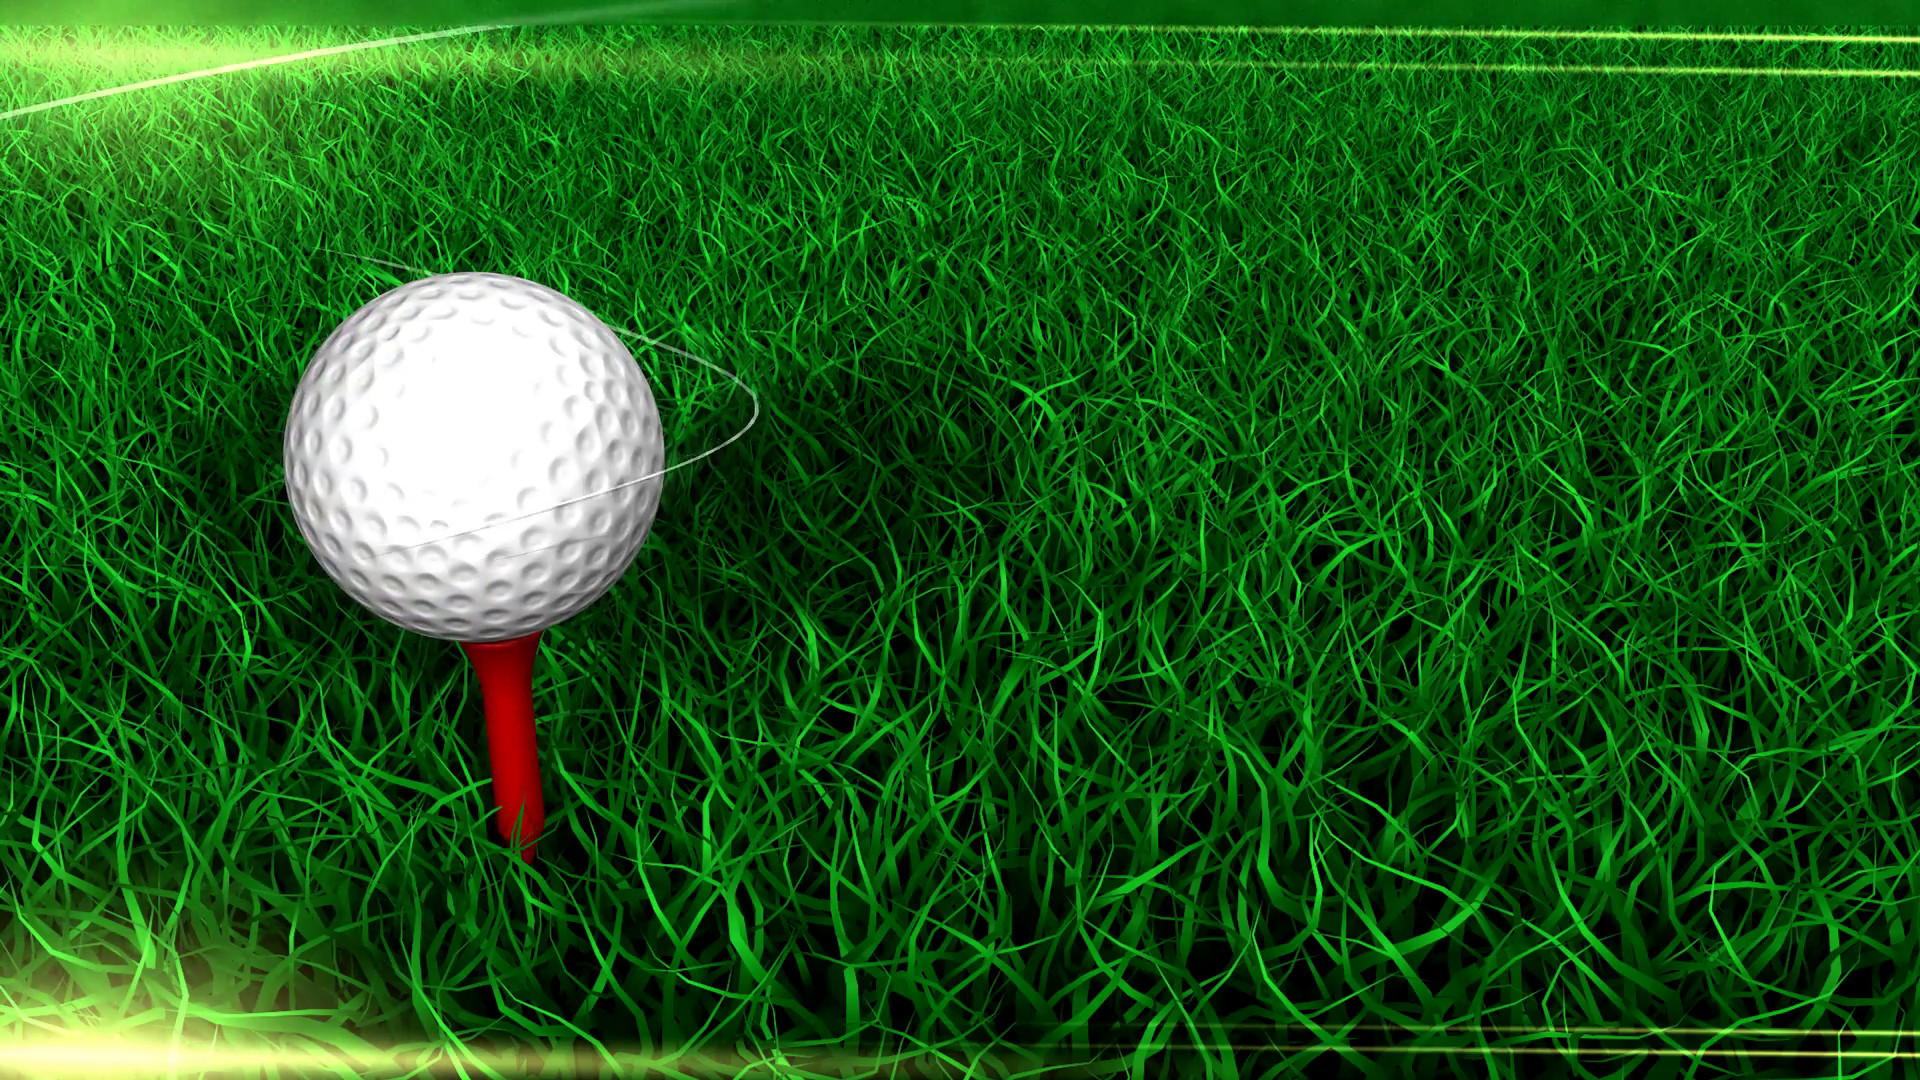 1920x1080 Sports background, golf, ball, field, grass. Motion Background - VideoBlocks